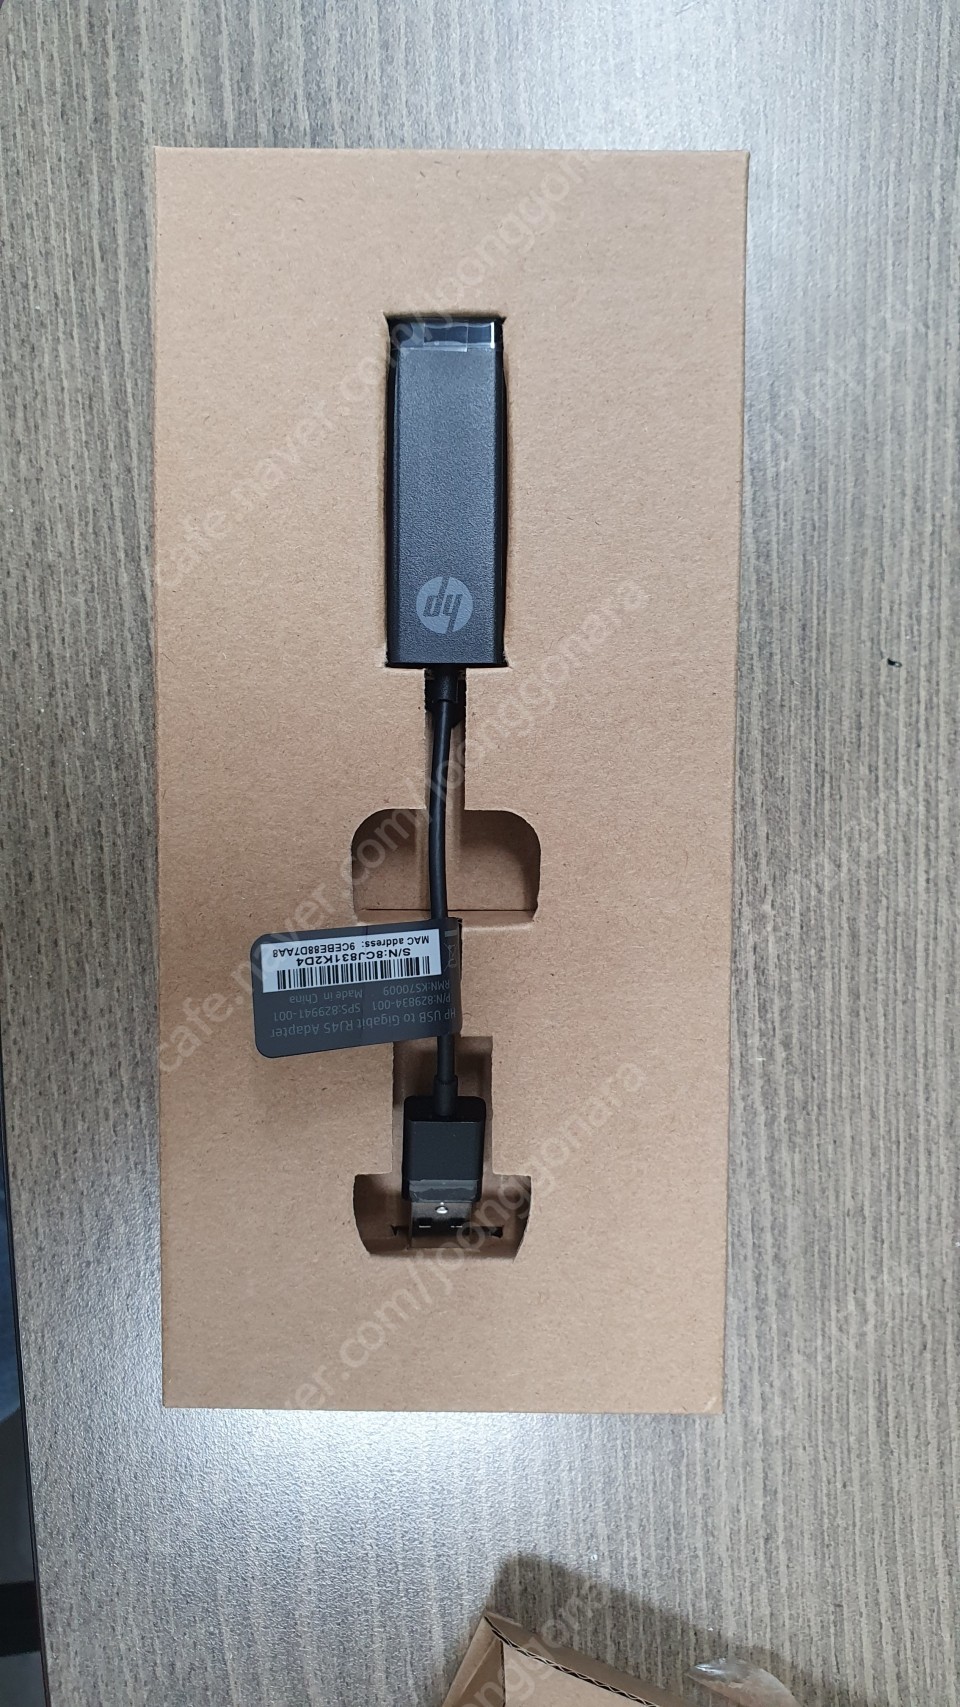 HP USB 3.0 to Gigabit RJ45 Adapter (미개봉)